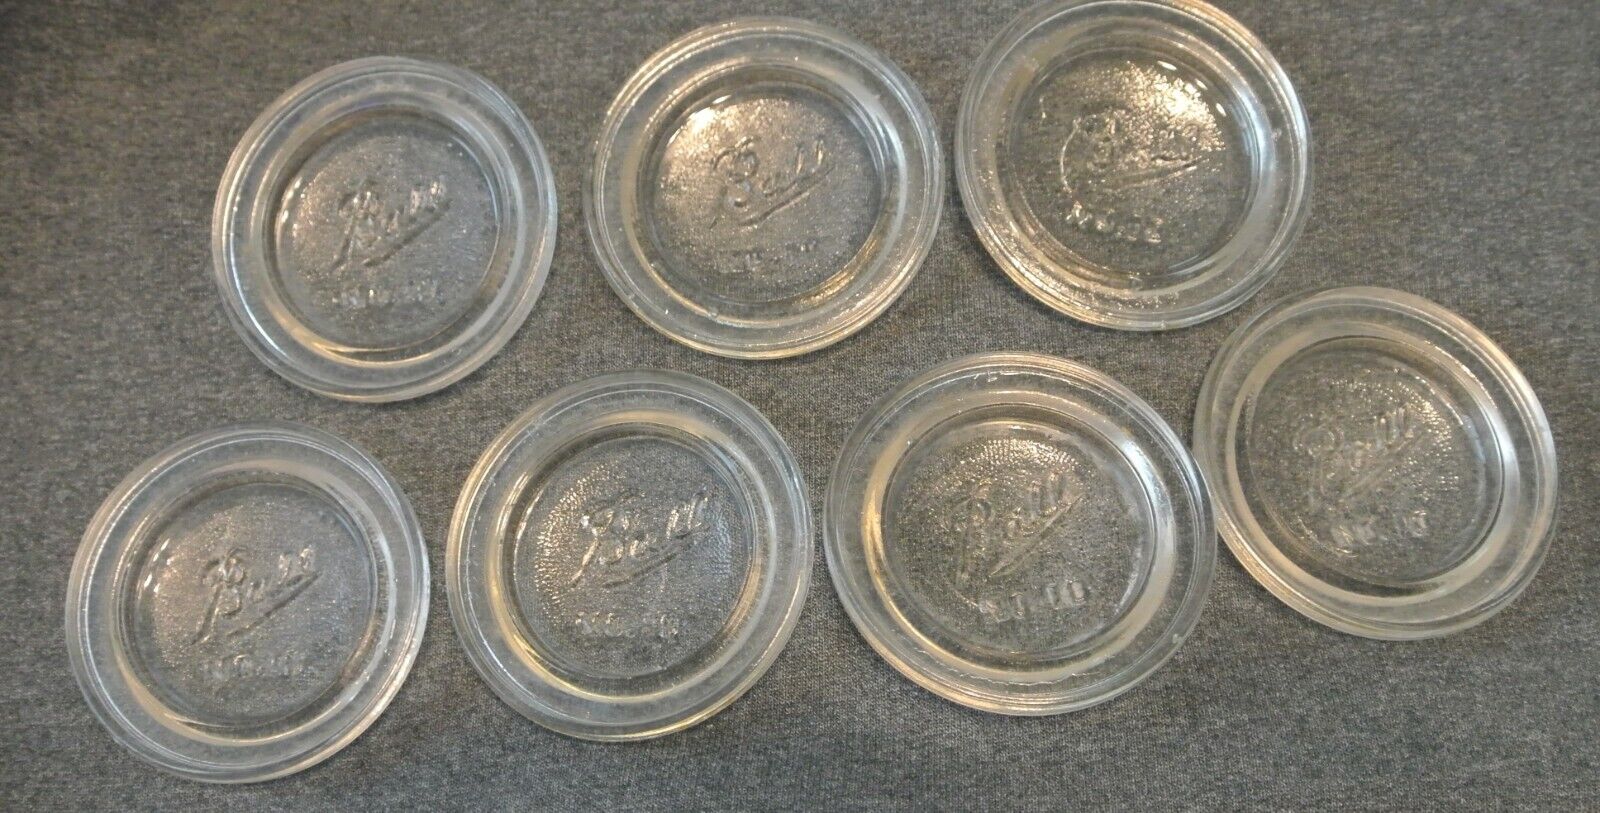 Ball no 10 Vintage glass lids  inserts (7)